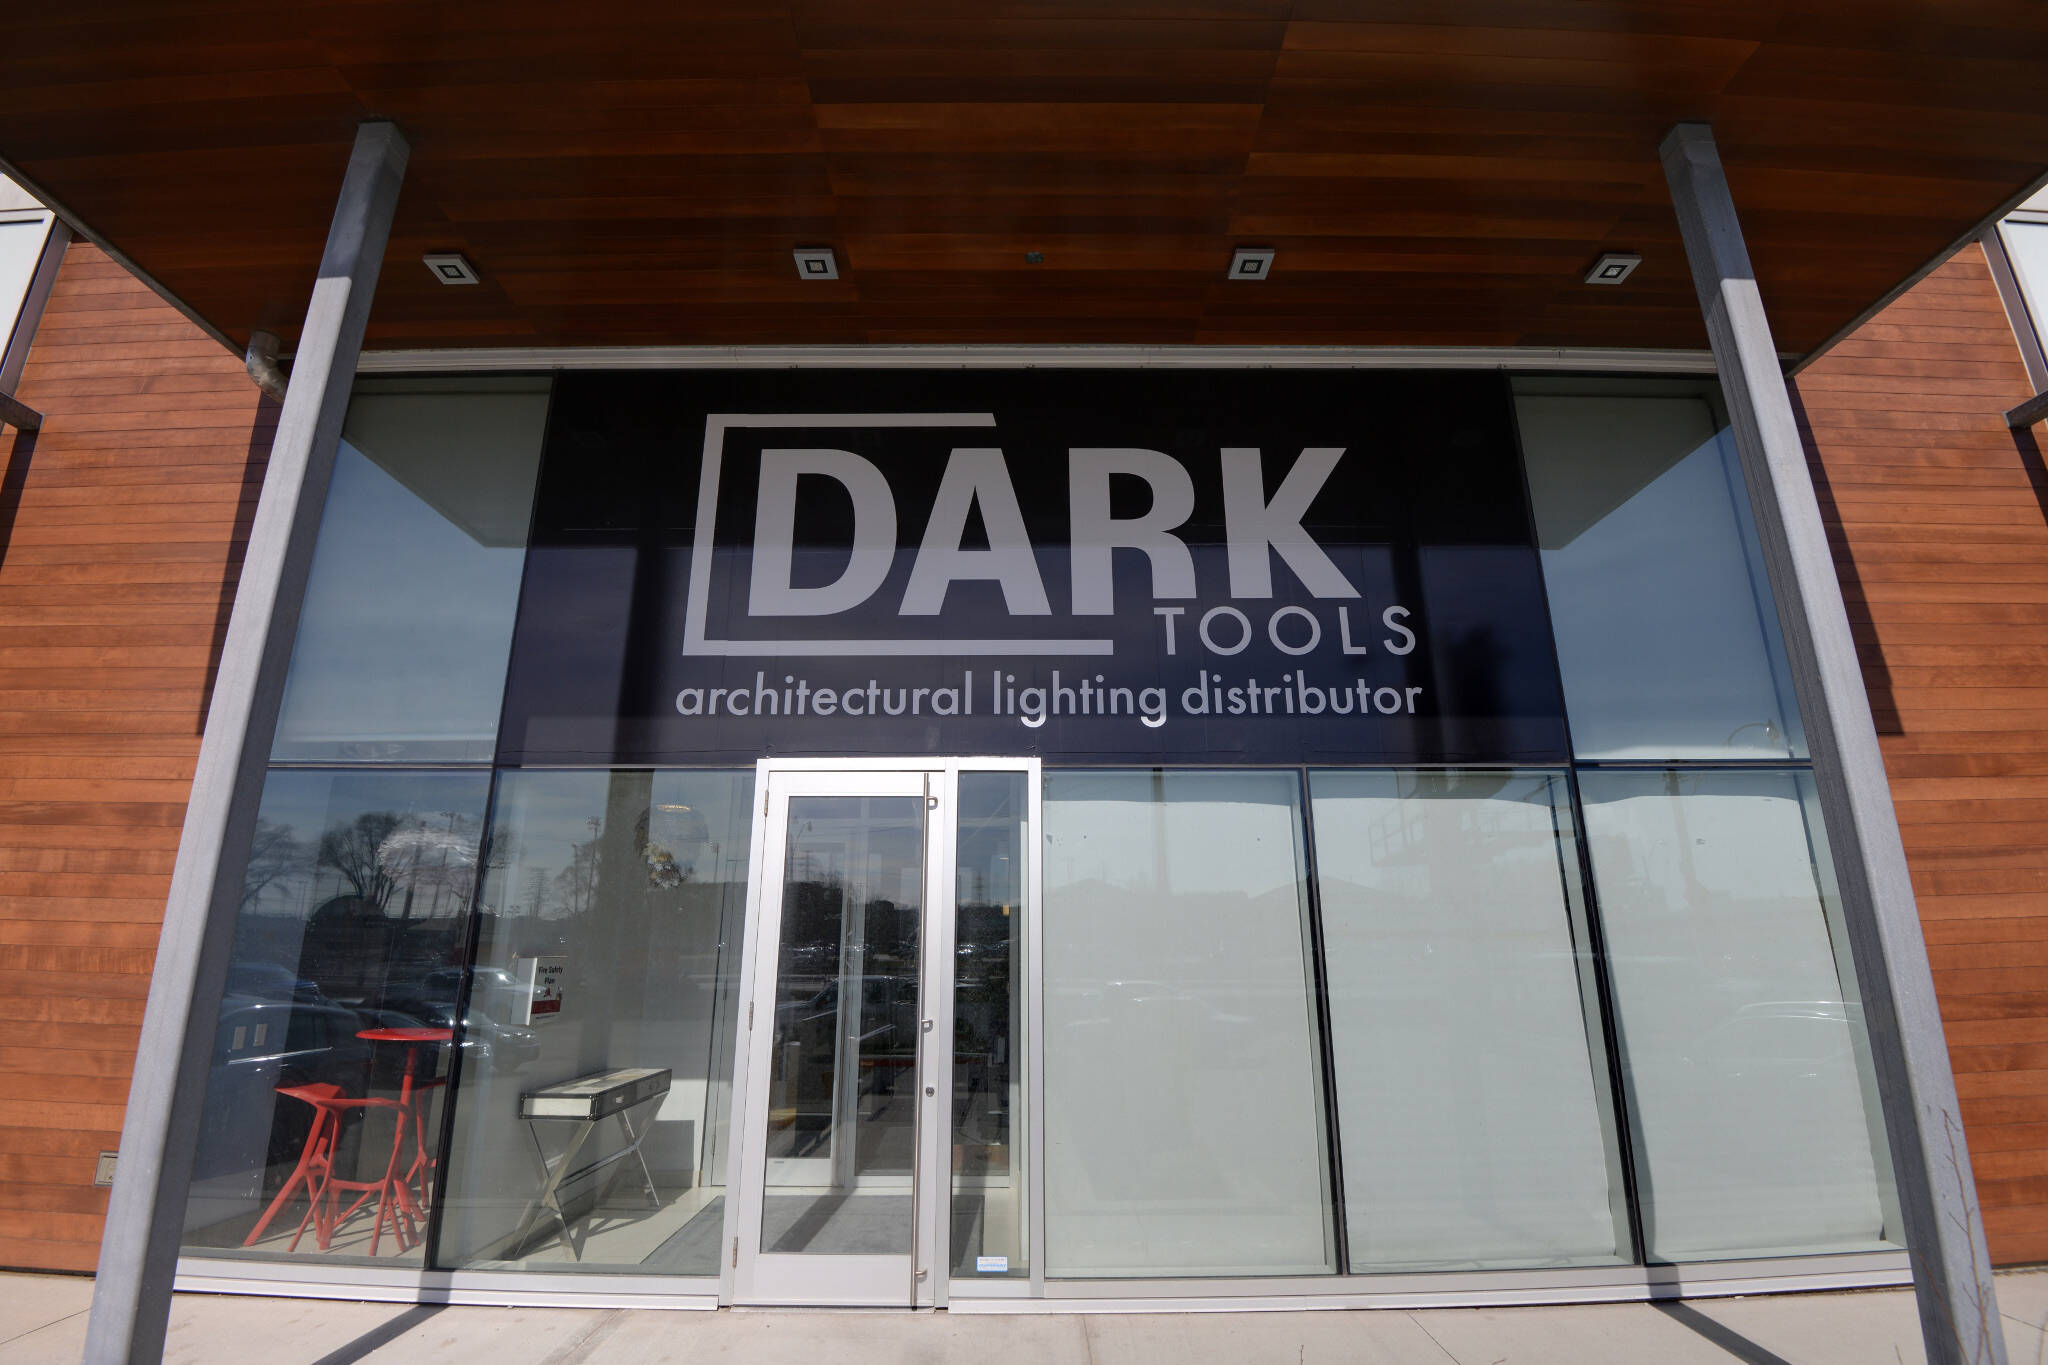 Dark Tools